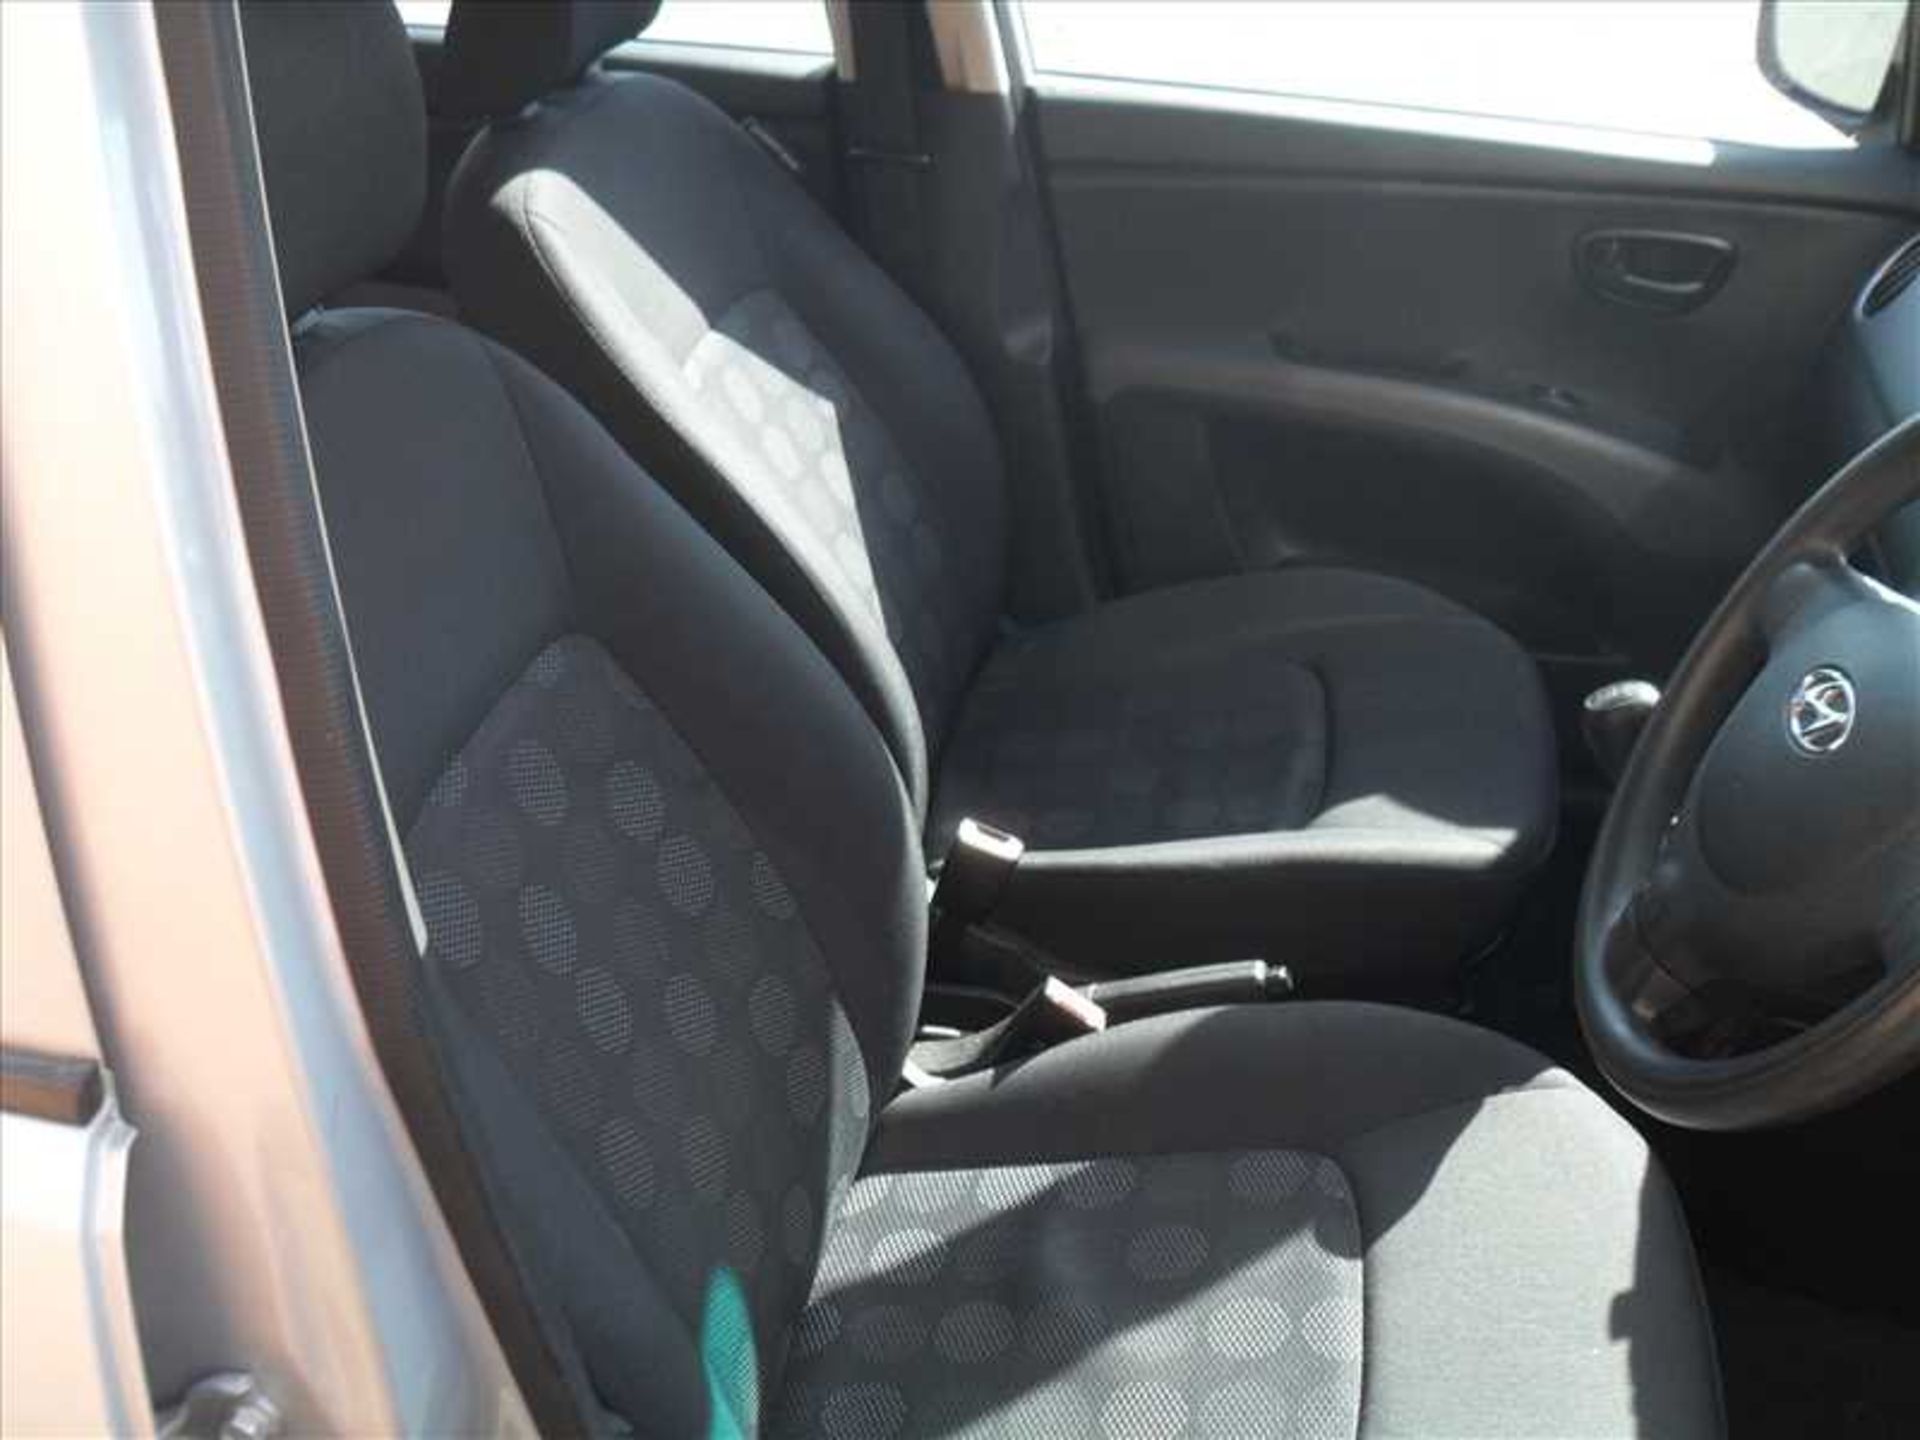 Hyundai i10 1.2 Classic 5-door hatchback Registration no. EJ60 BTU Date of registration: 05/11/ - Image 8 of 10